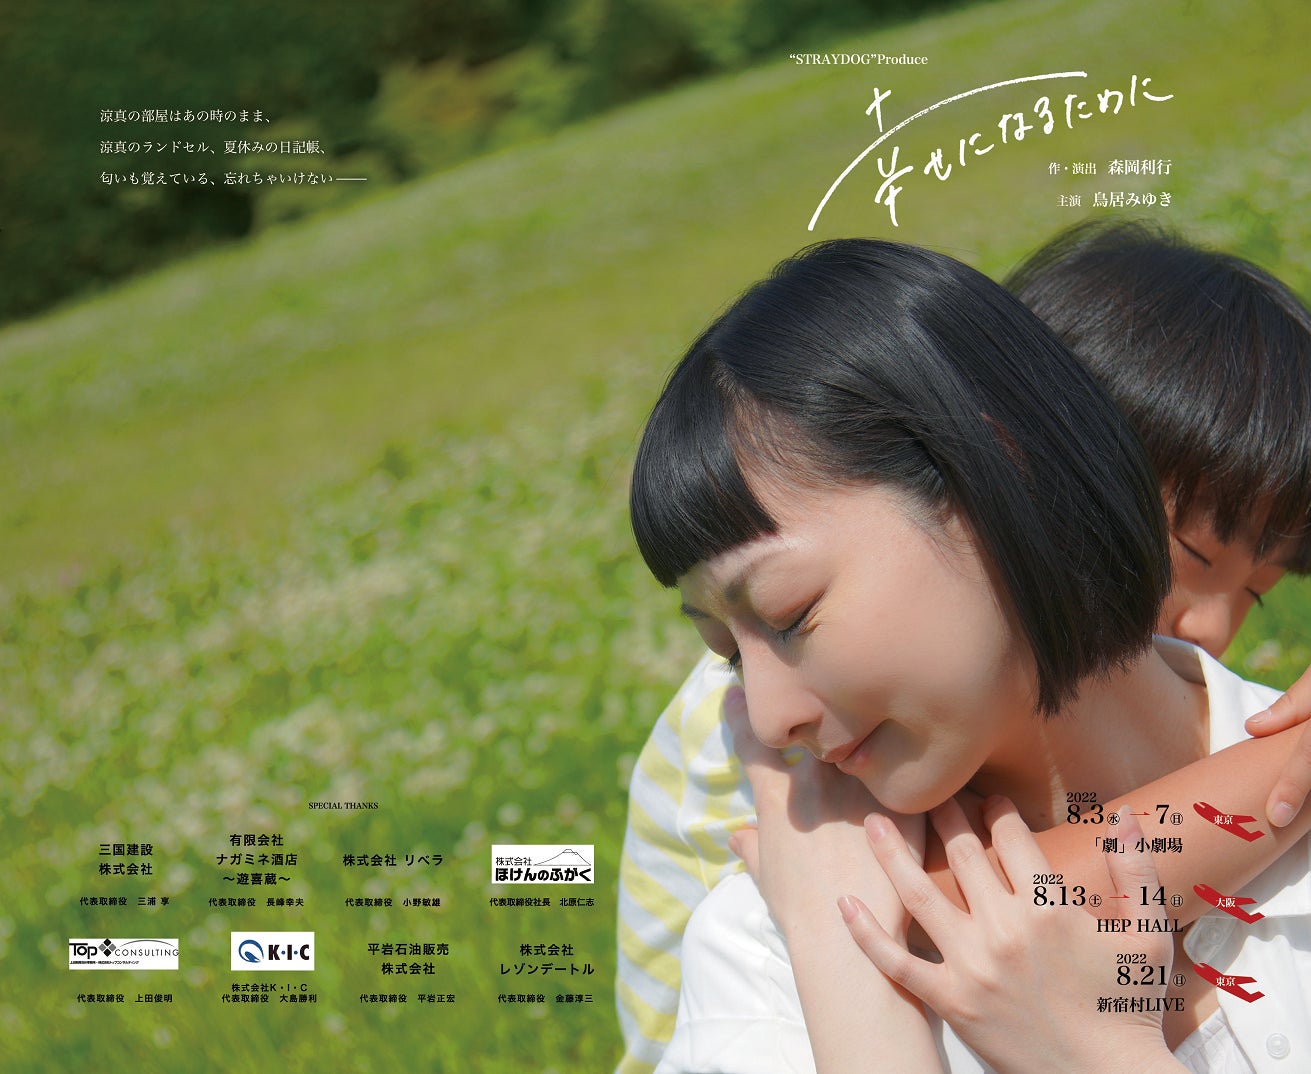 TEAM SHACHI × 田森 オリジナルコラボグッズ販売決定！8月20日～「出現画廊 in 名古屋パルコ」で限定販売！